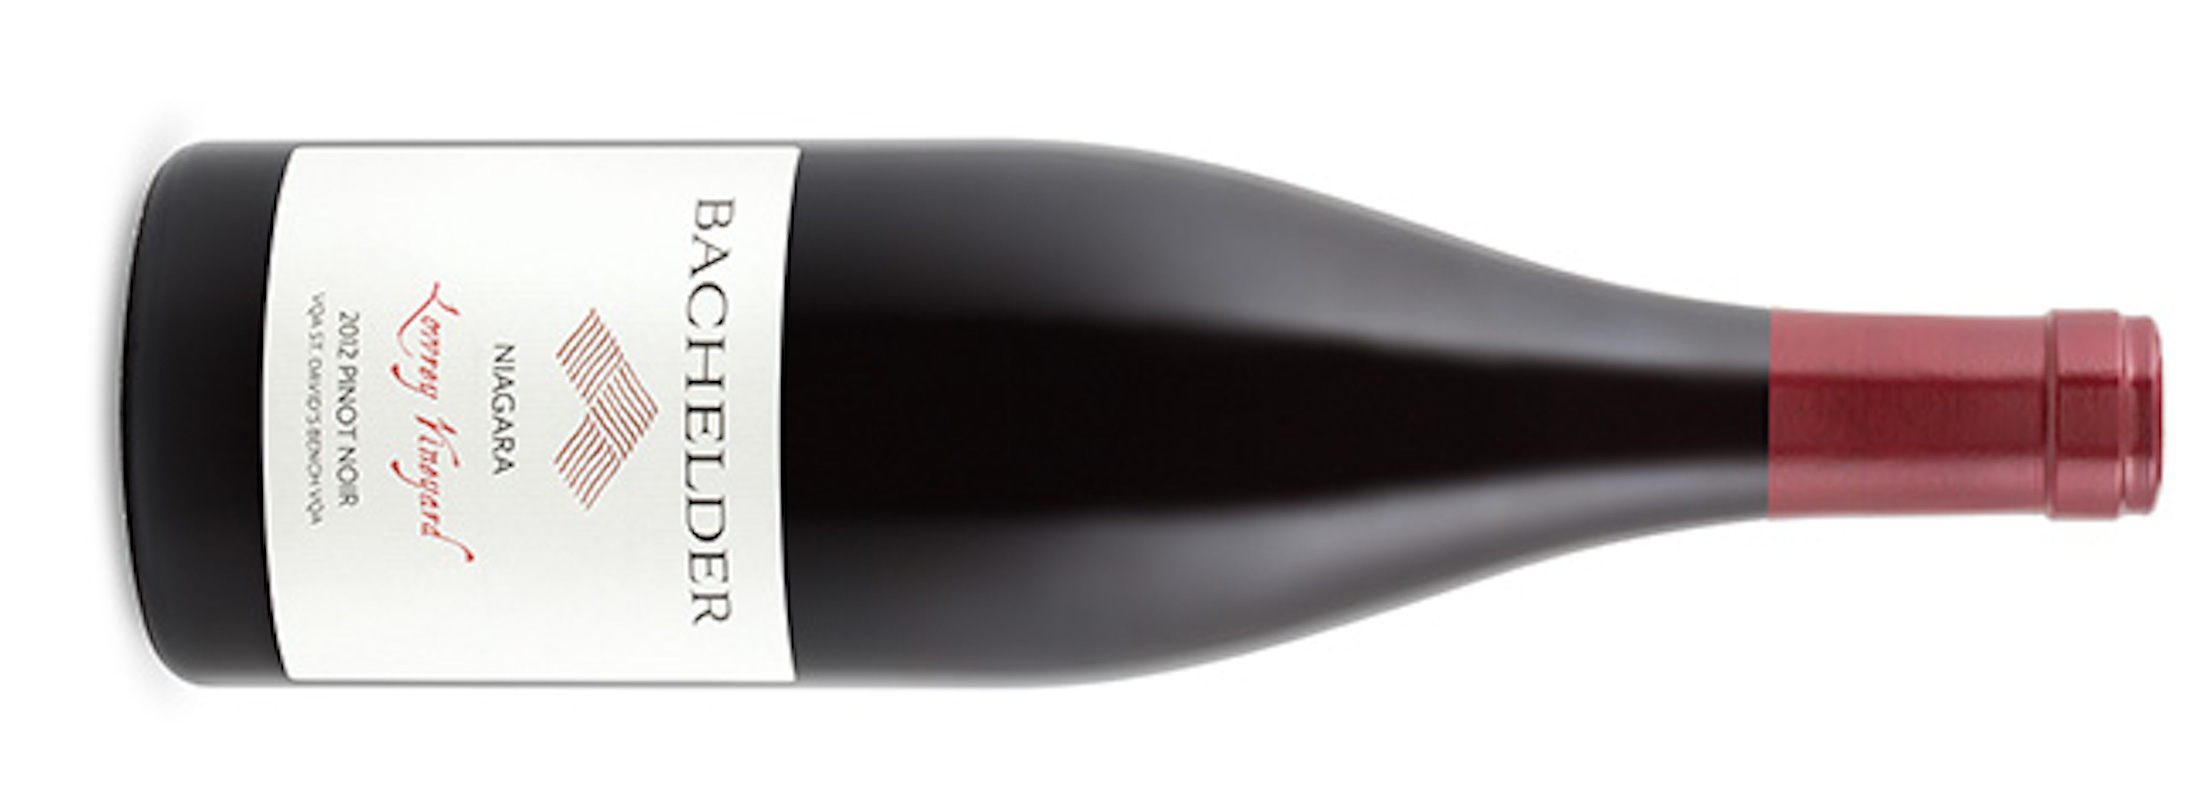 Bachelder-Lowrey-Vineyard-Pinot-Noir-2012-Label